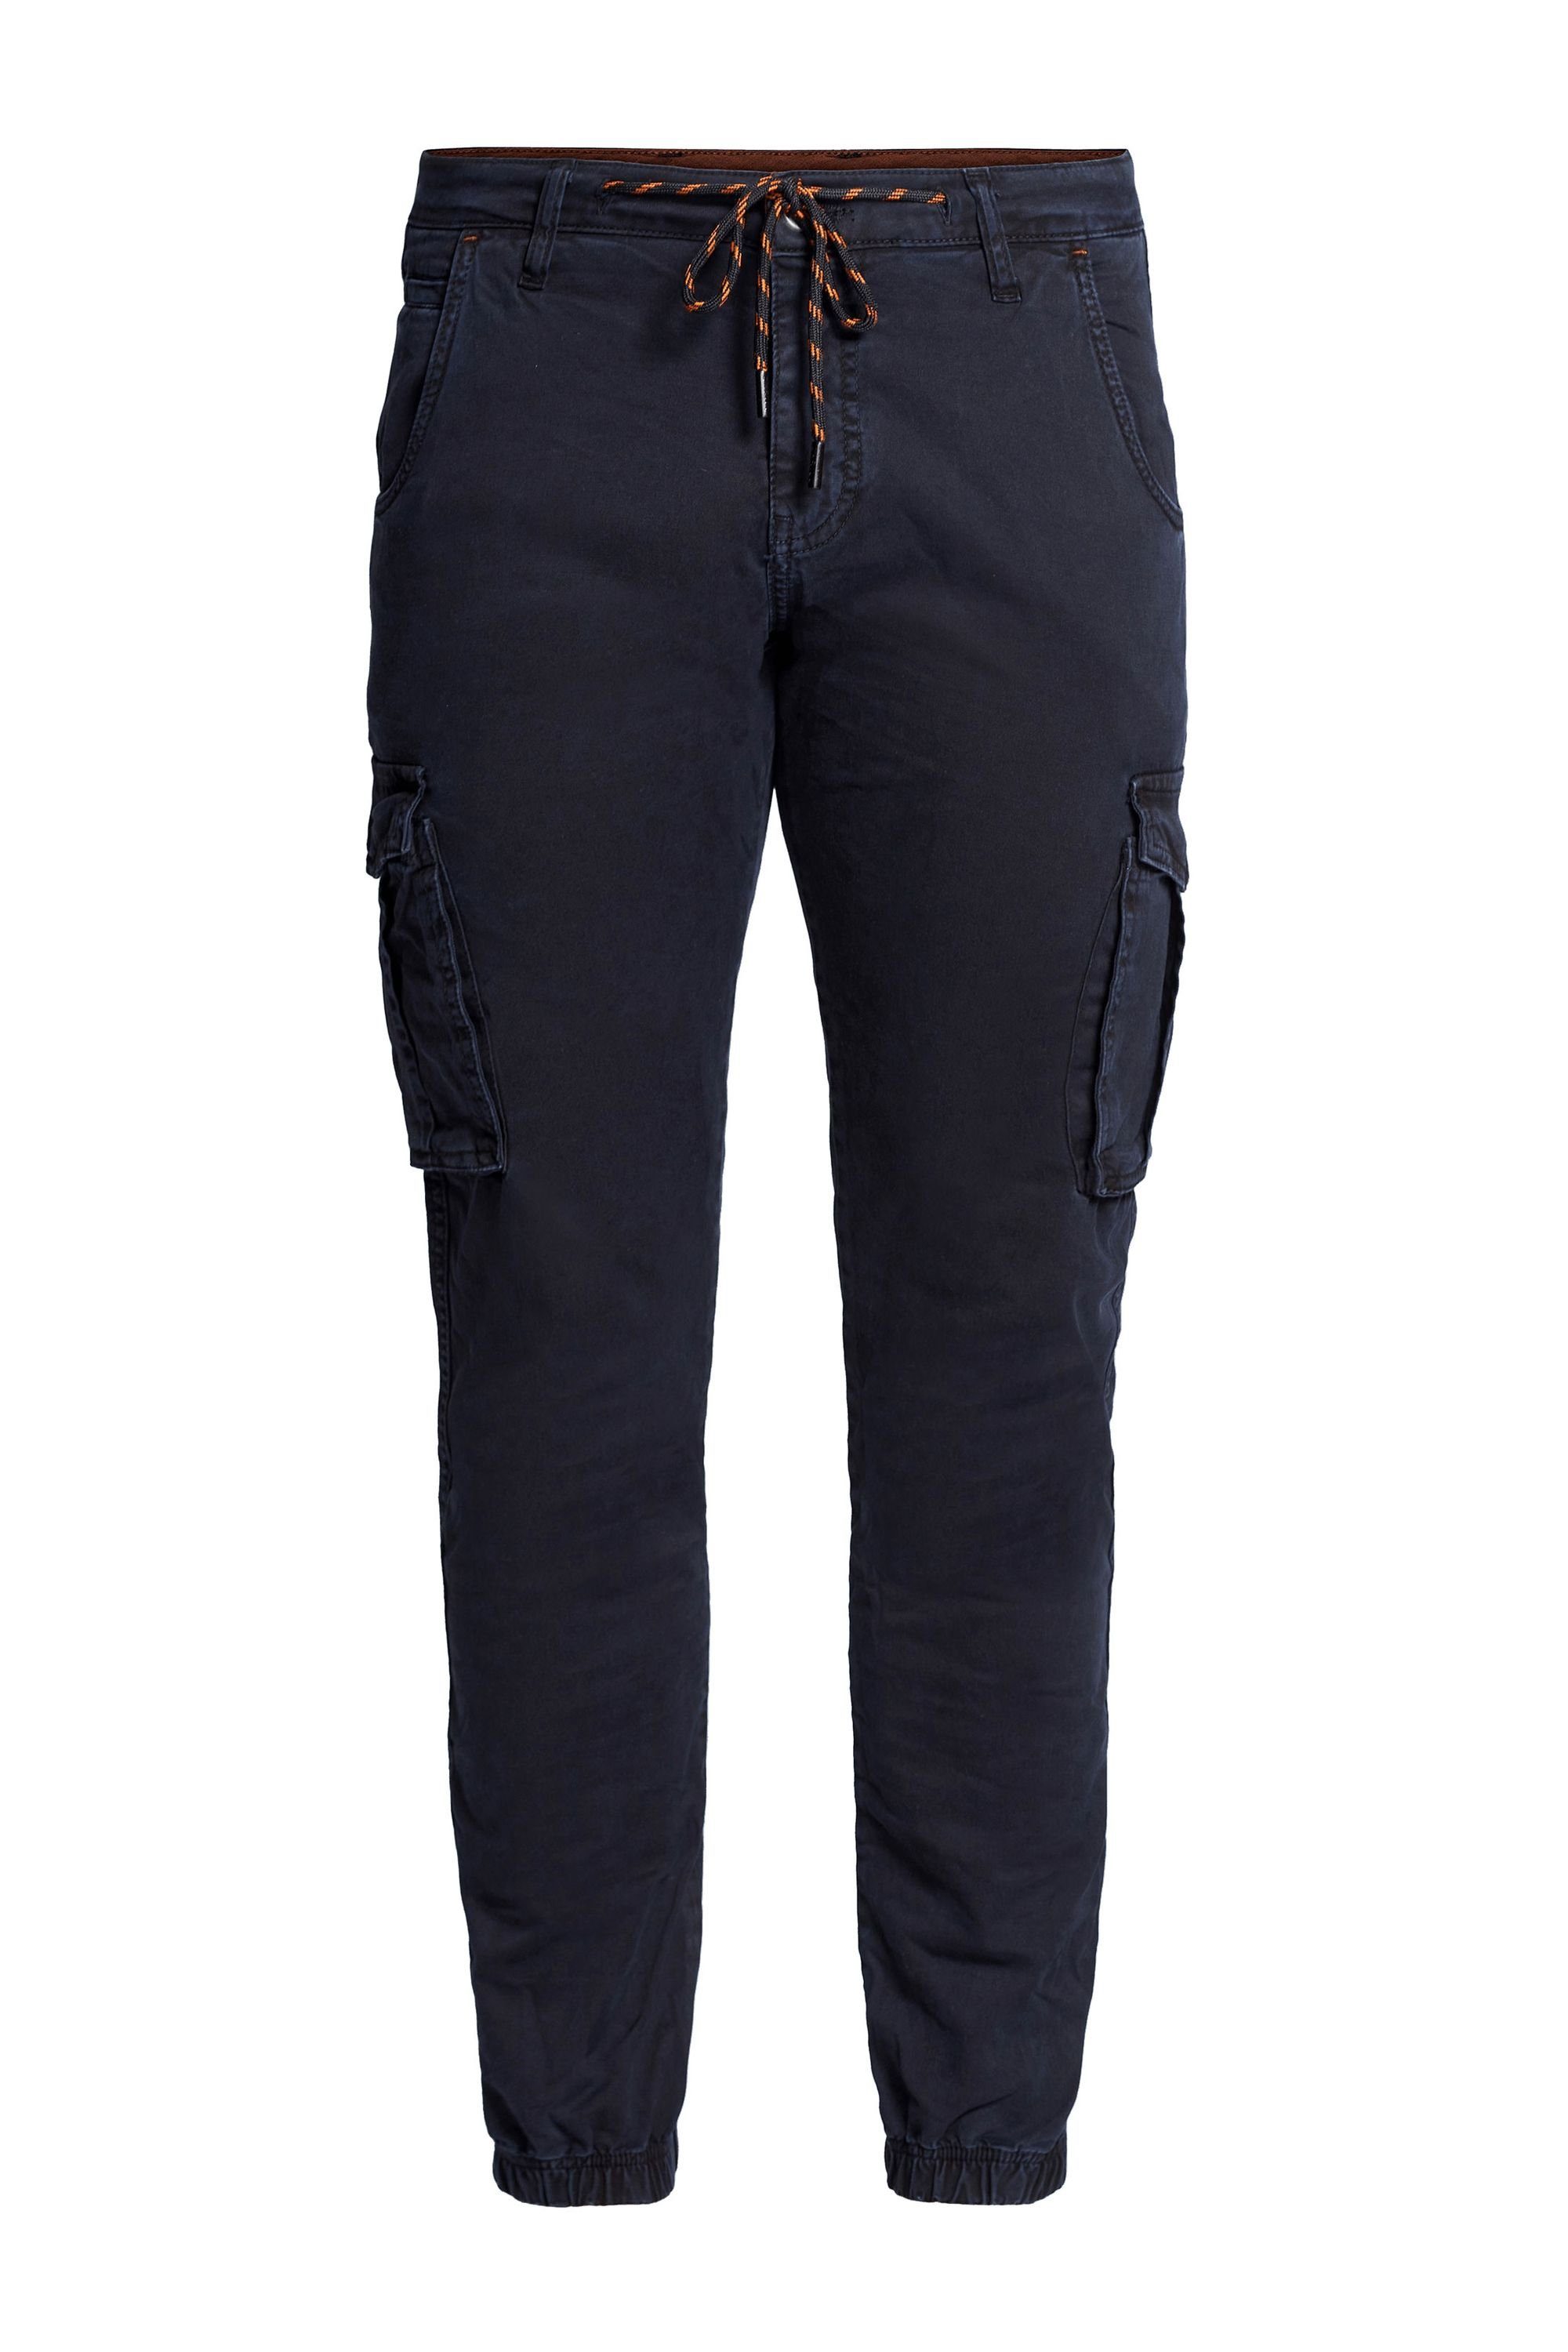 angenehmer Black Hose Tragekomfort 5-Pocket-Jeans MICHA Cargo Zhrill